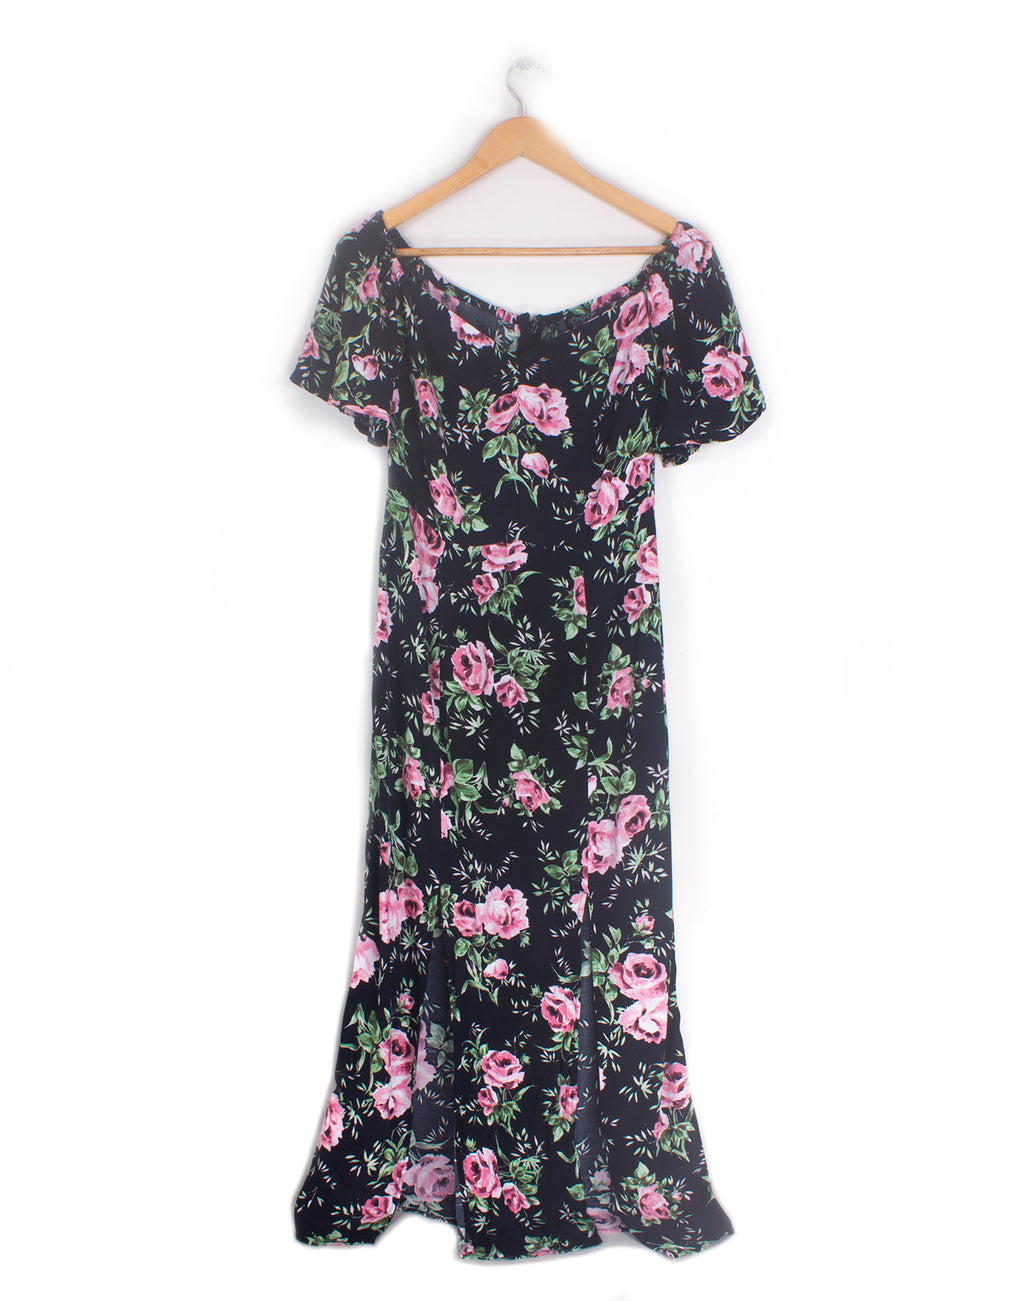 Topshop Black Pink Floral Maxi Dress - Size XS / S